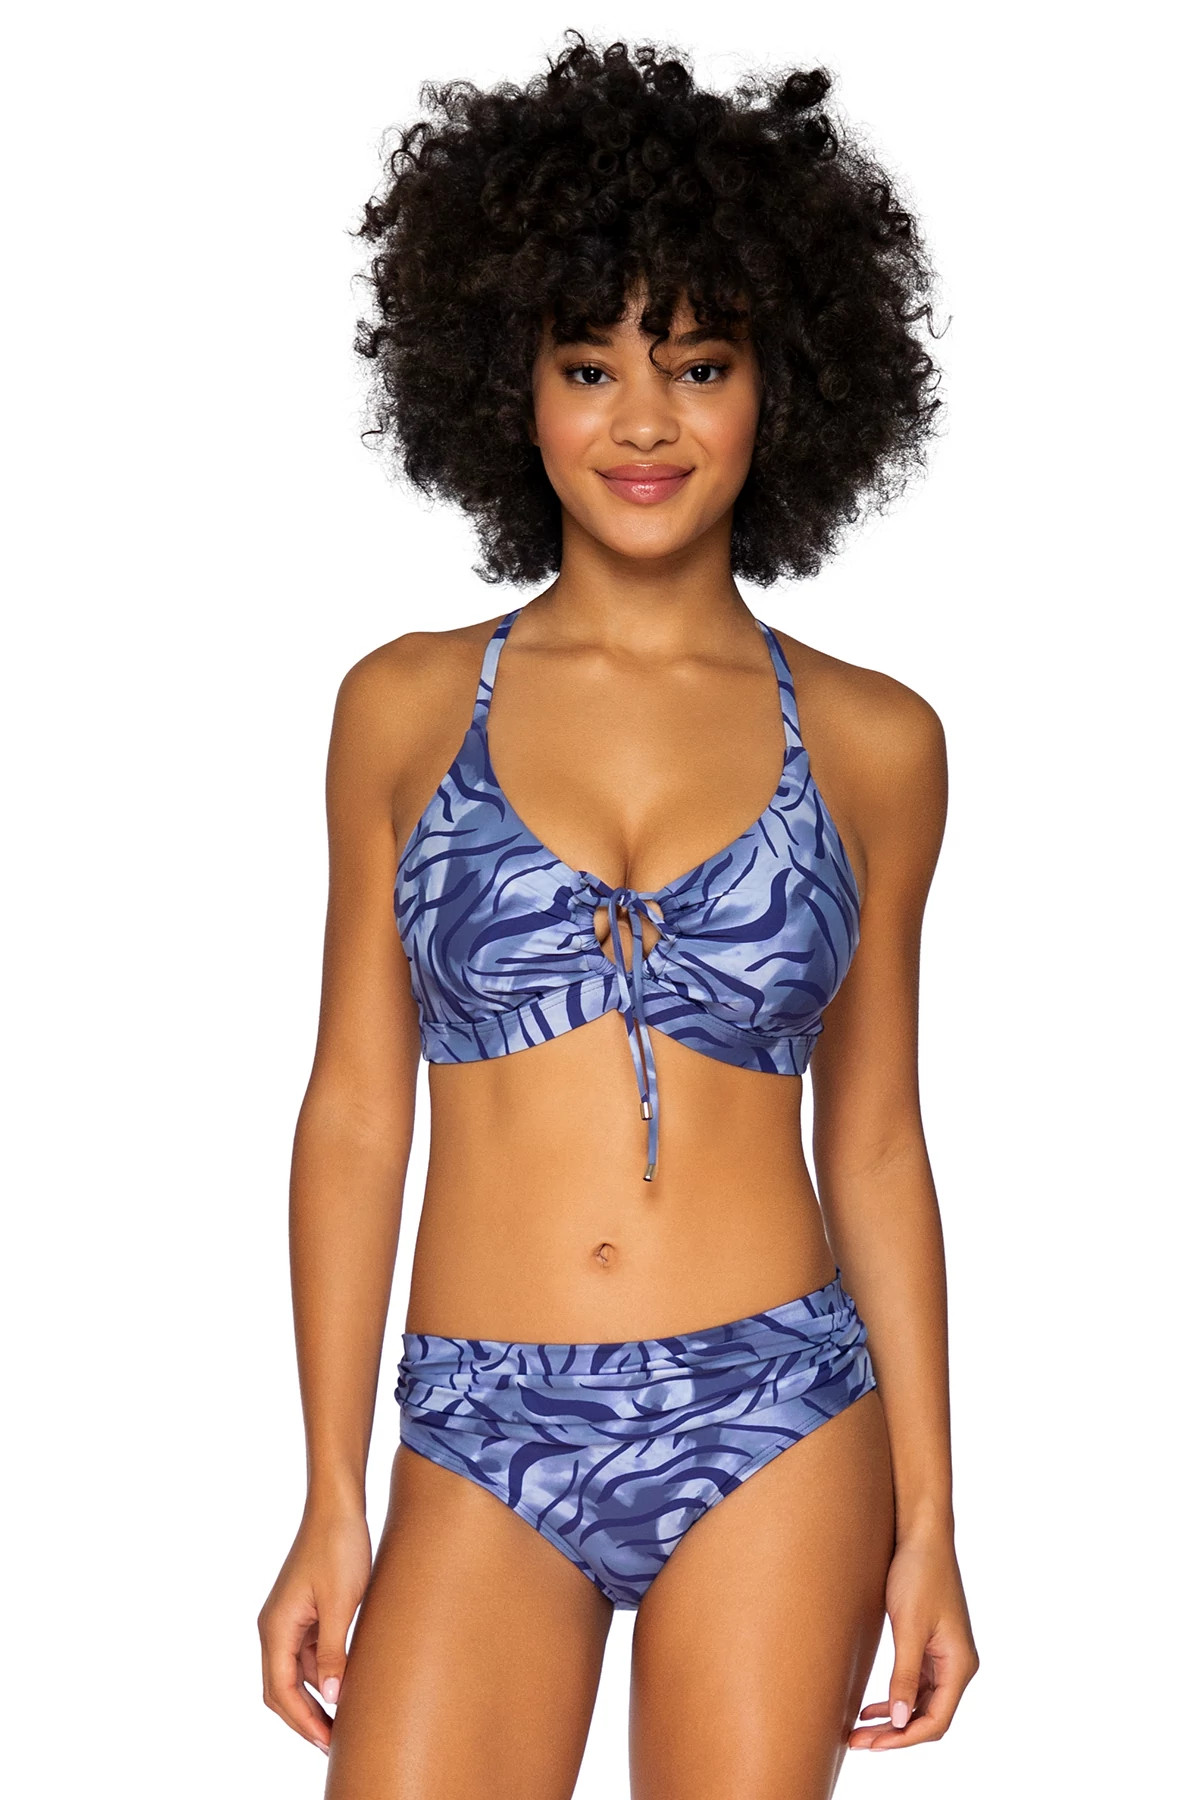 SUMATRA Kauai Underwire Bikini Top (D+ Cup) image number 1